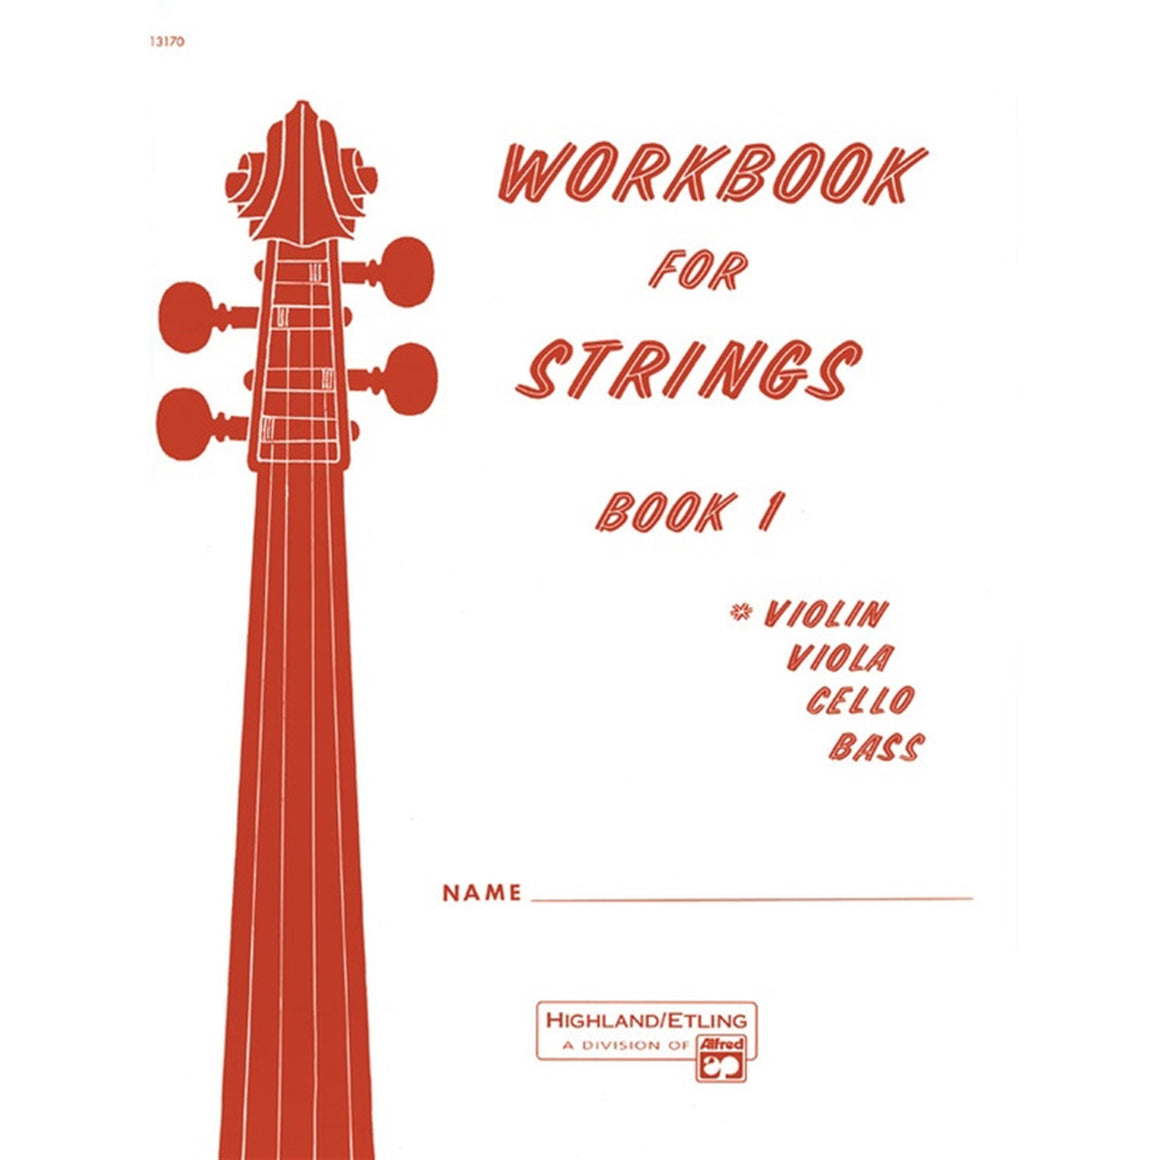 ALFRED 13170 Workbook for Strings, Book 1 [Violin]